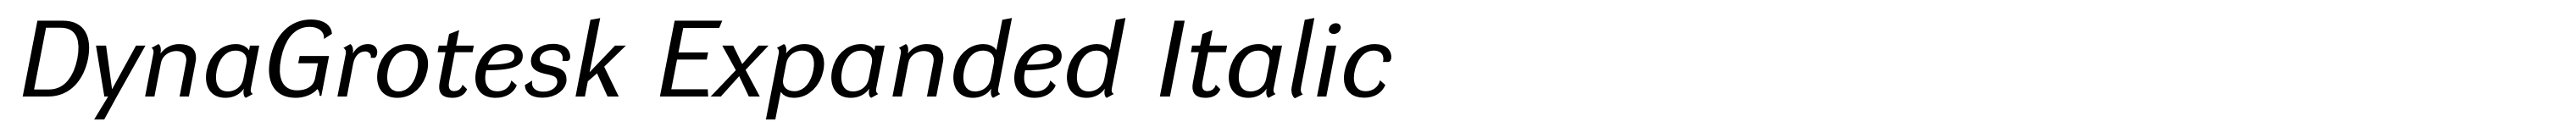 DynaGrotesk Expanded Italic